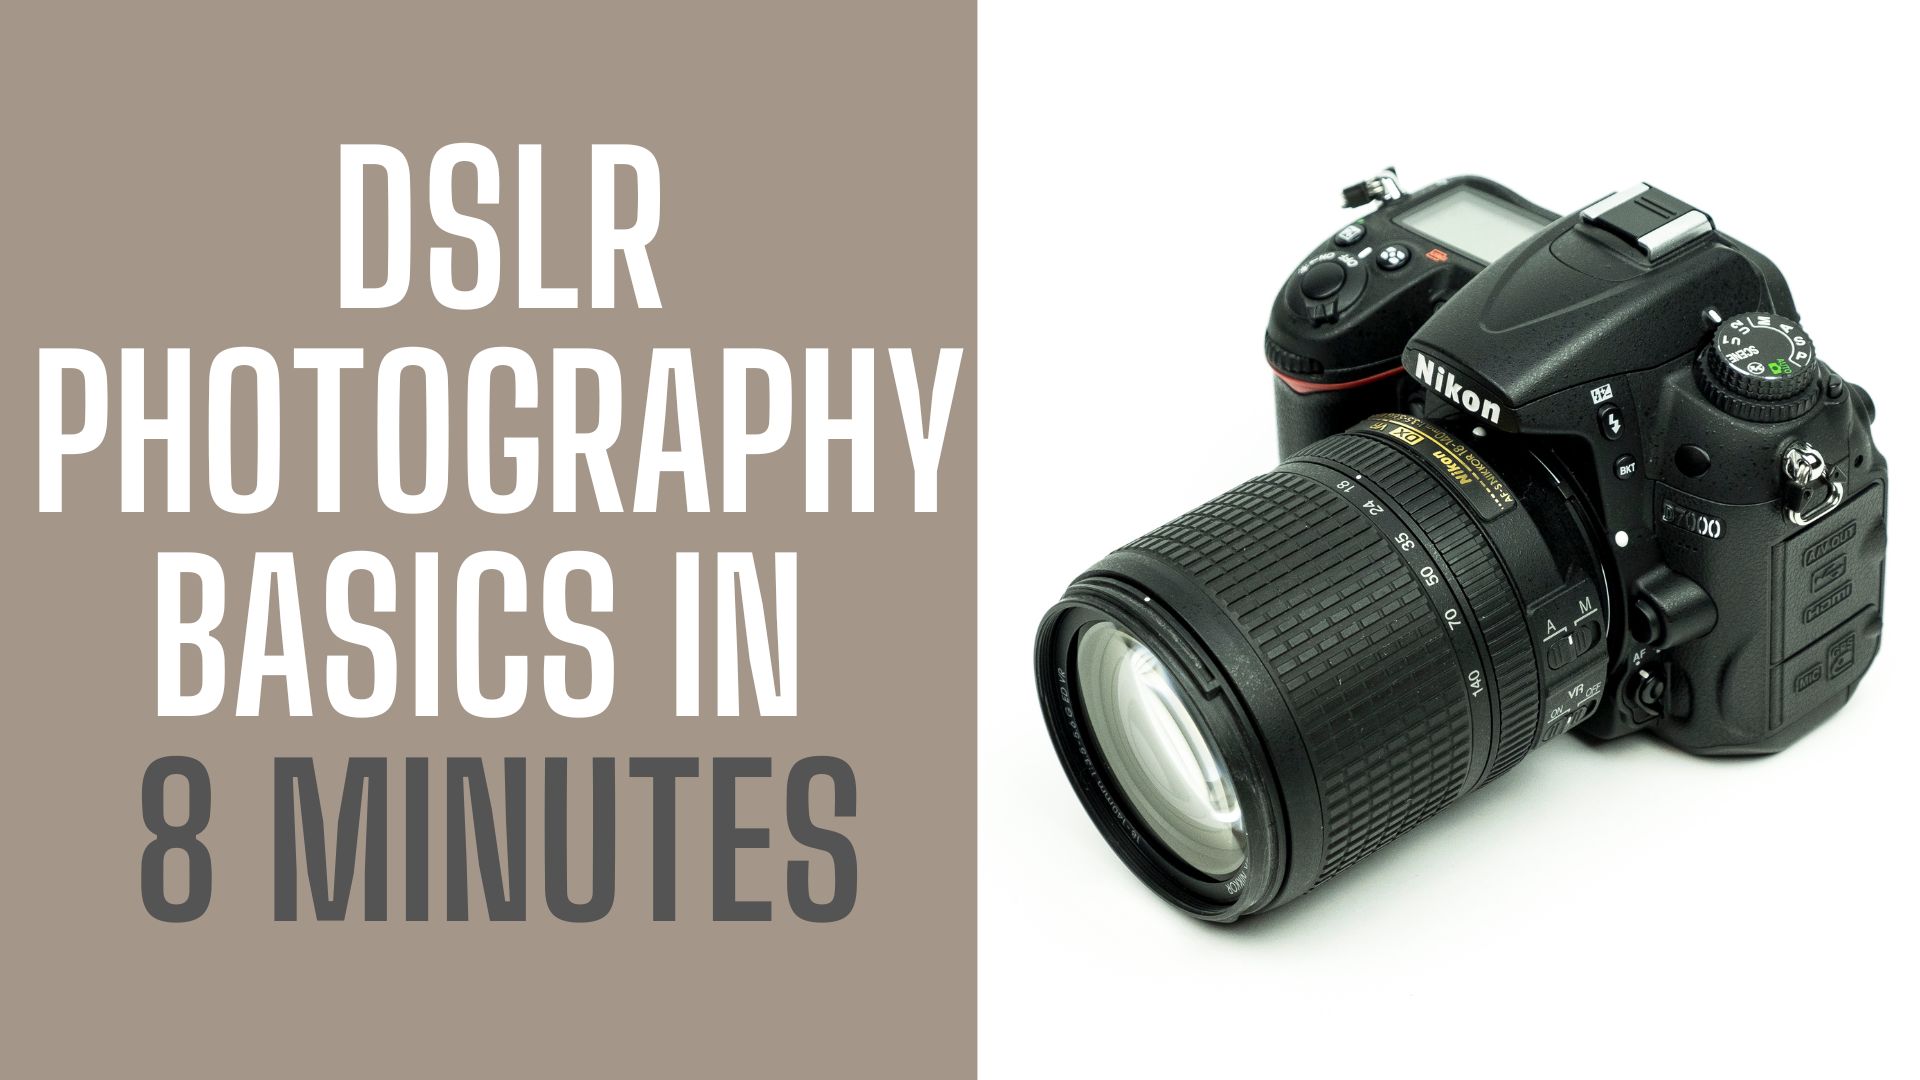 DSLR Photography Basics